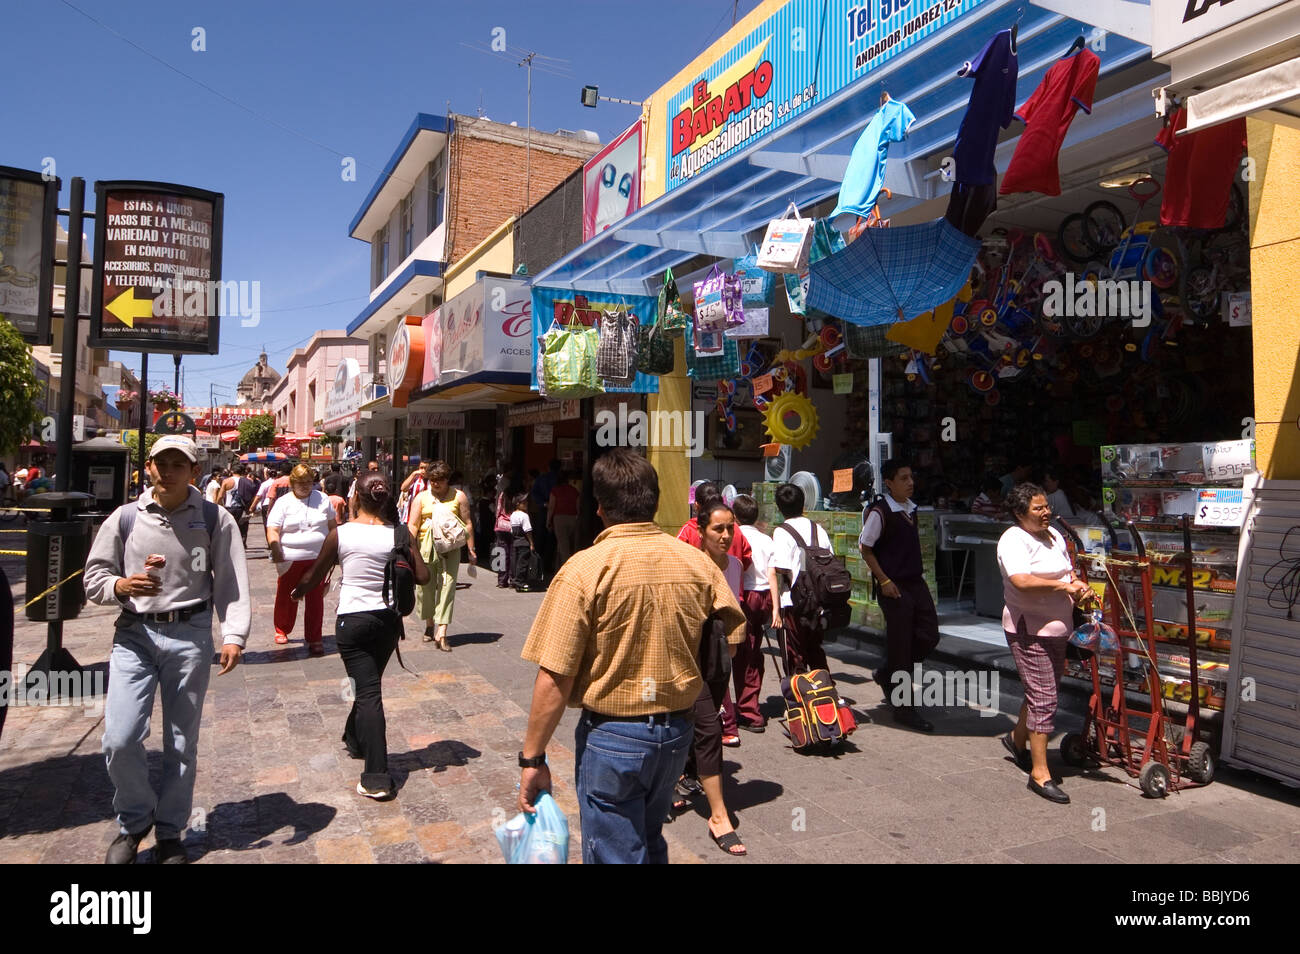 Elk187 2008 Mexico Aguascalientes downtown street scene people shopping Stock Photo